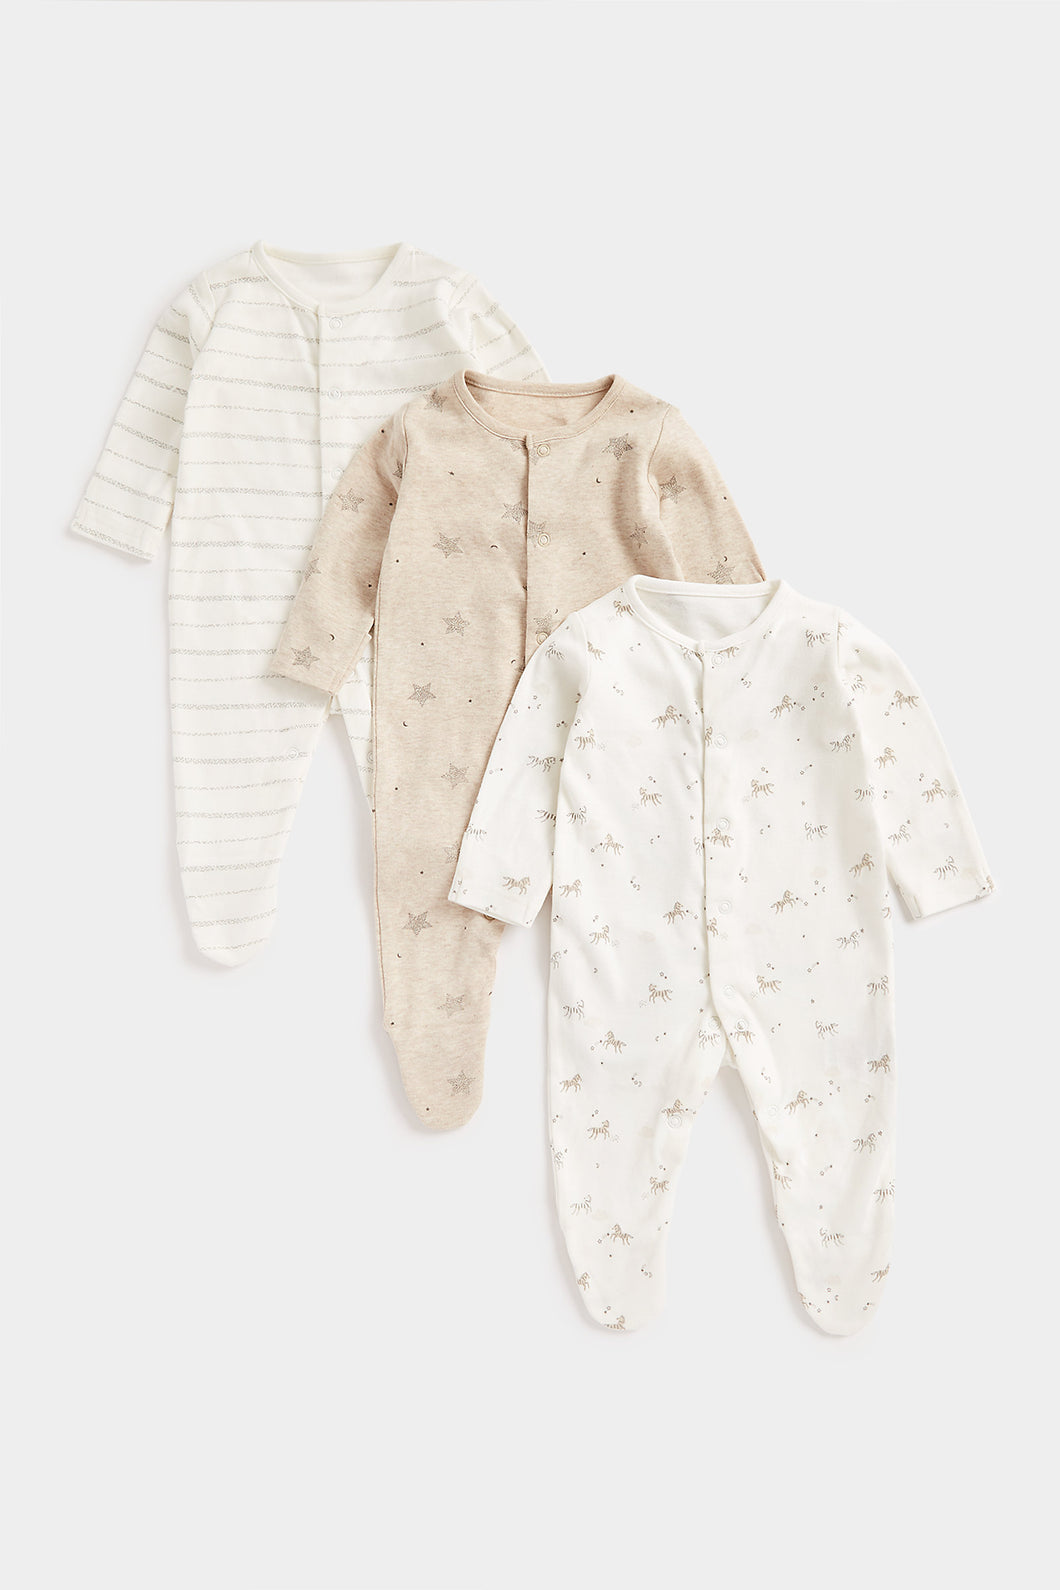 Mothercare Zebra Sleepsuits - 3 Pack